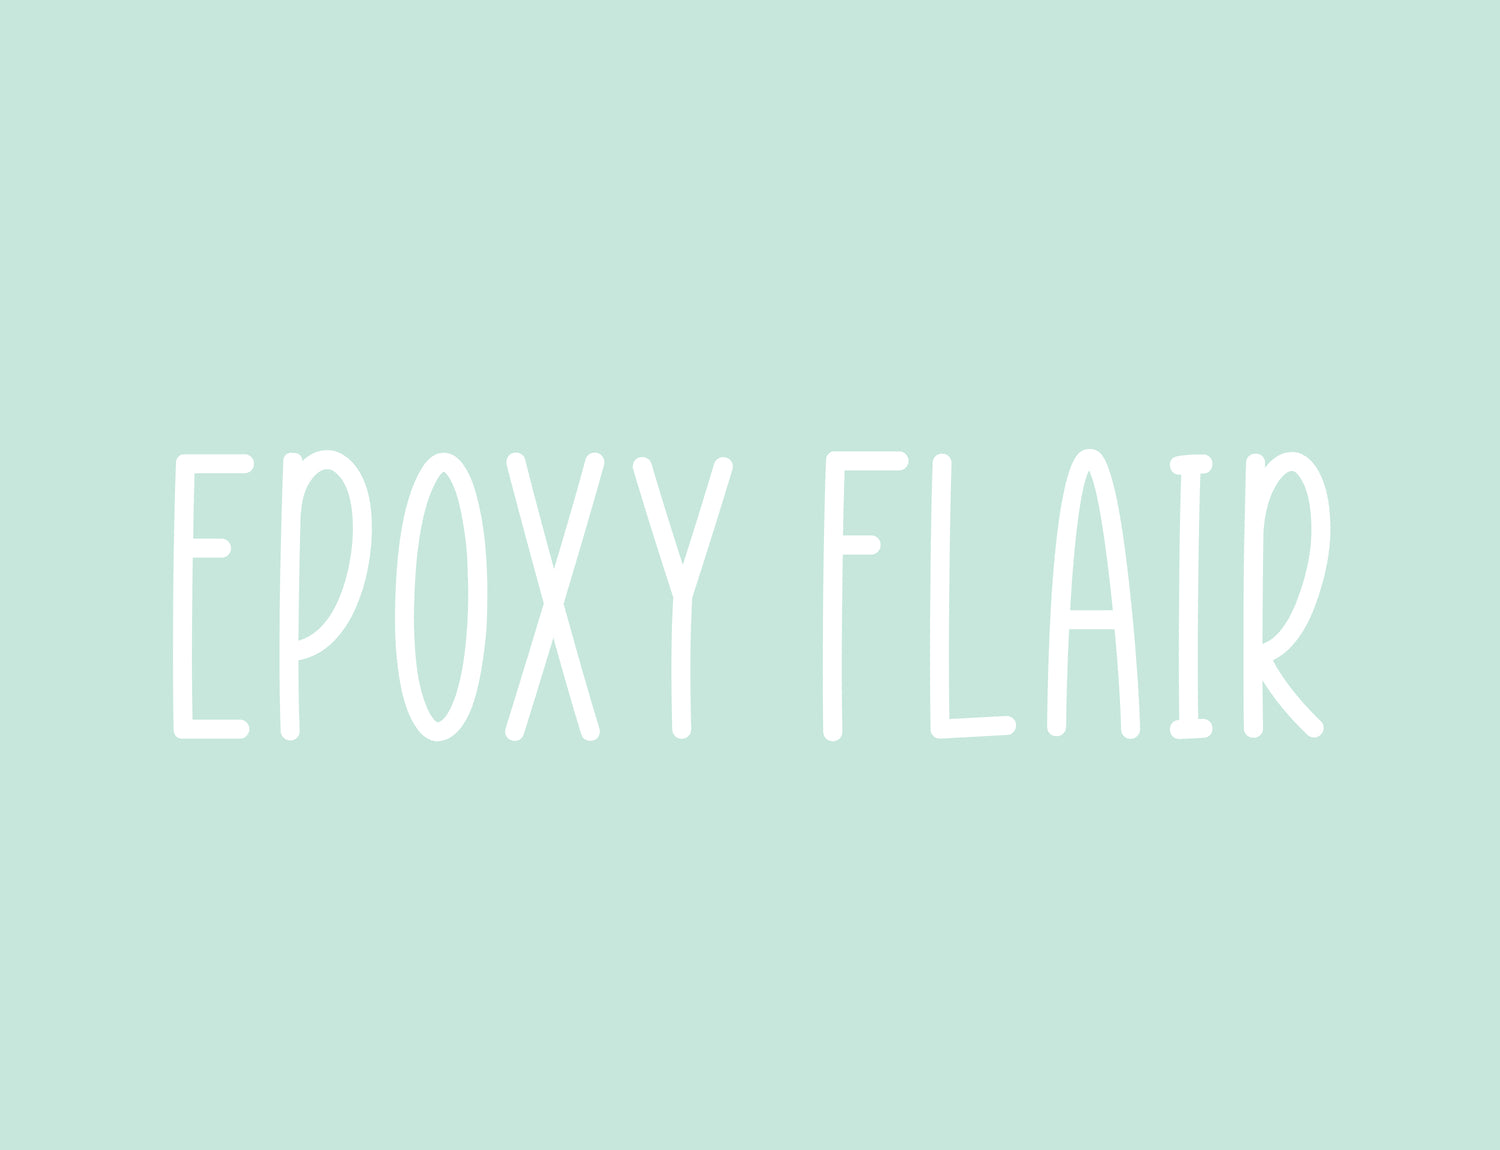 Epoxy Flair